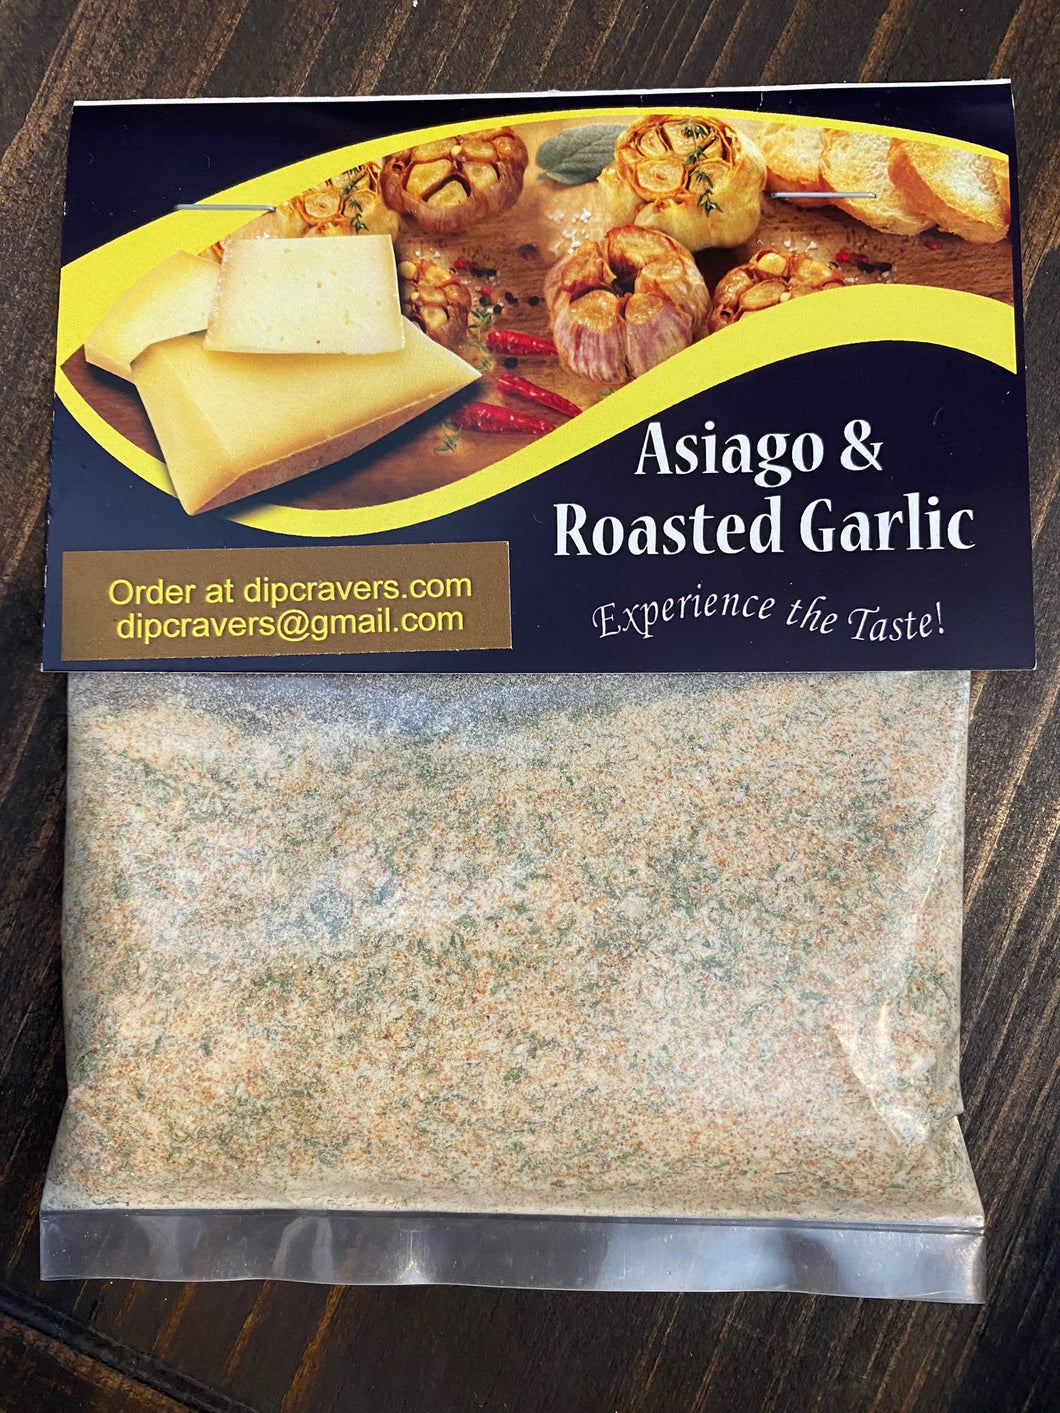 Asiago & Roasted Garlic